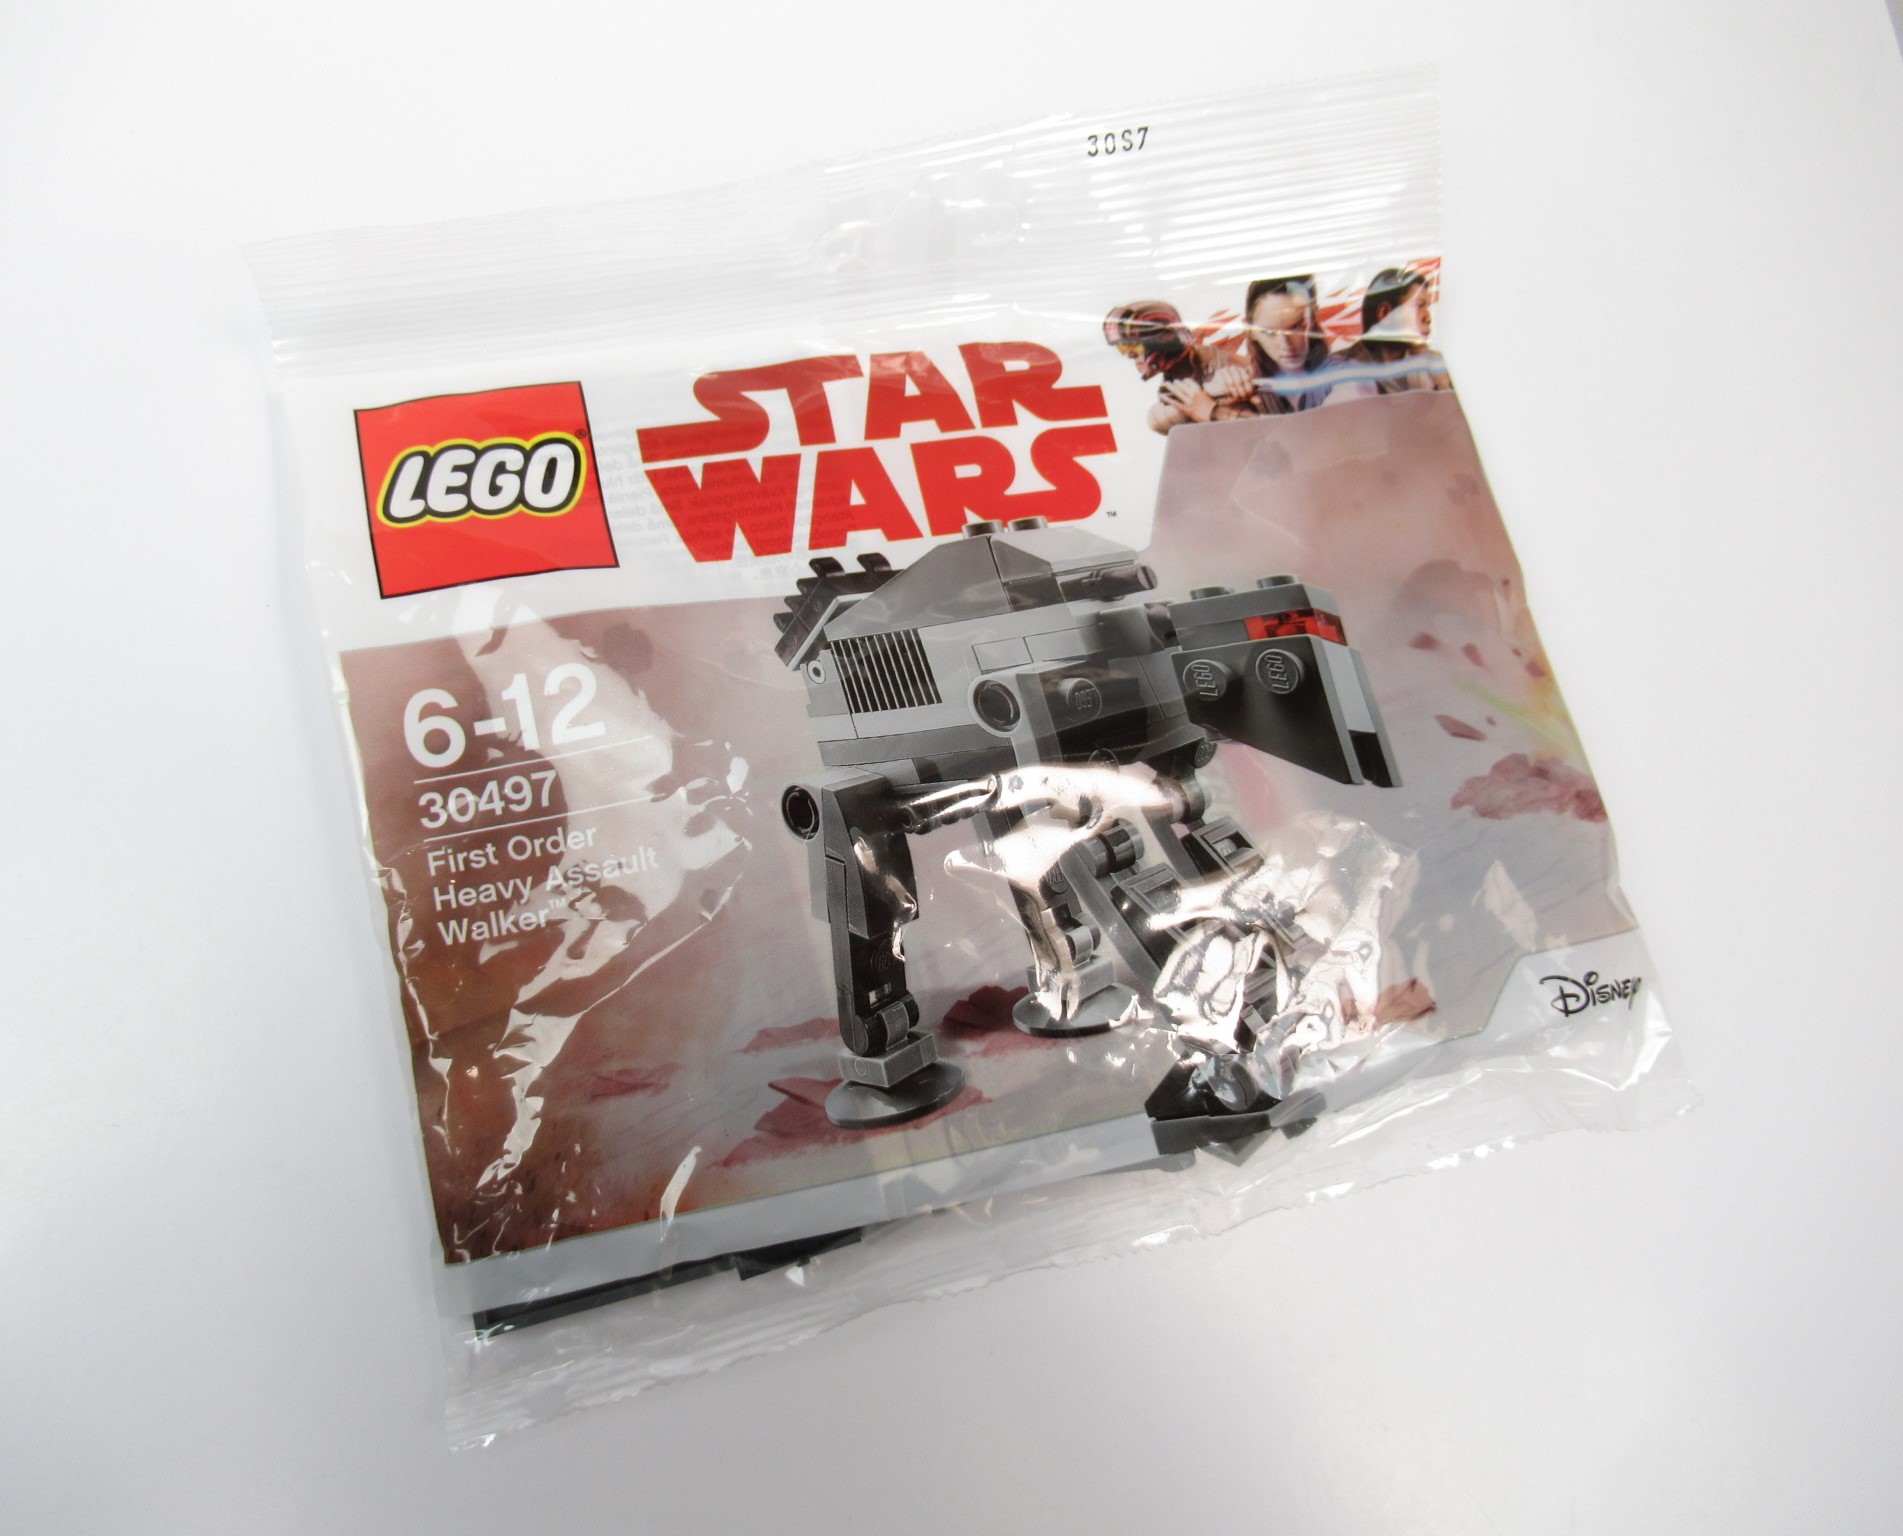 LEGO Star Wars 30497 First Order Heavy Assault Walker Polybag की तस्वीर